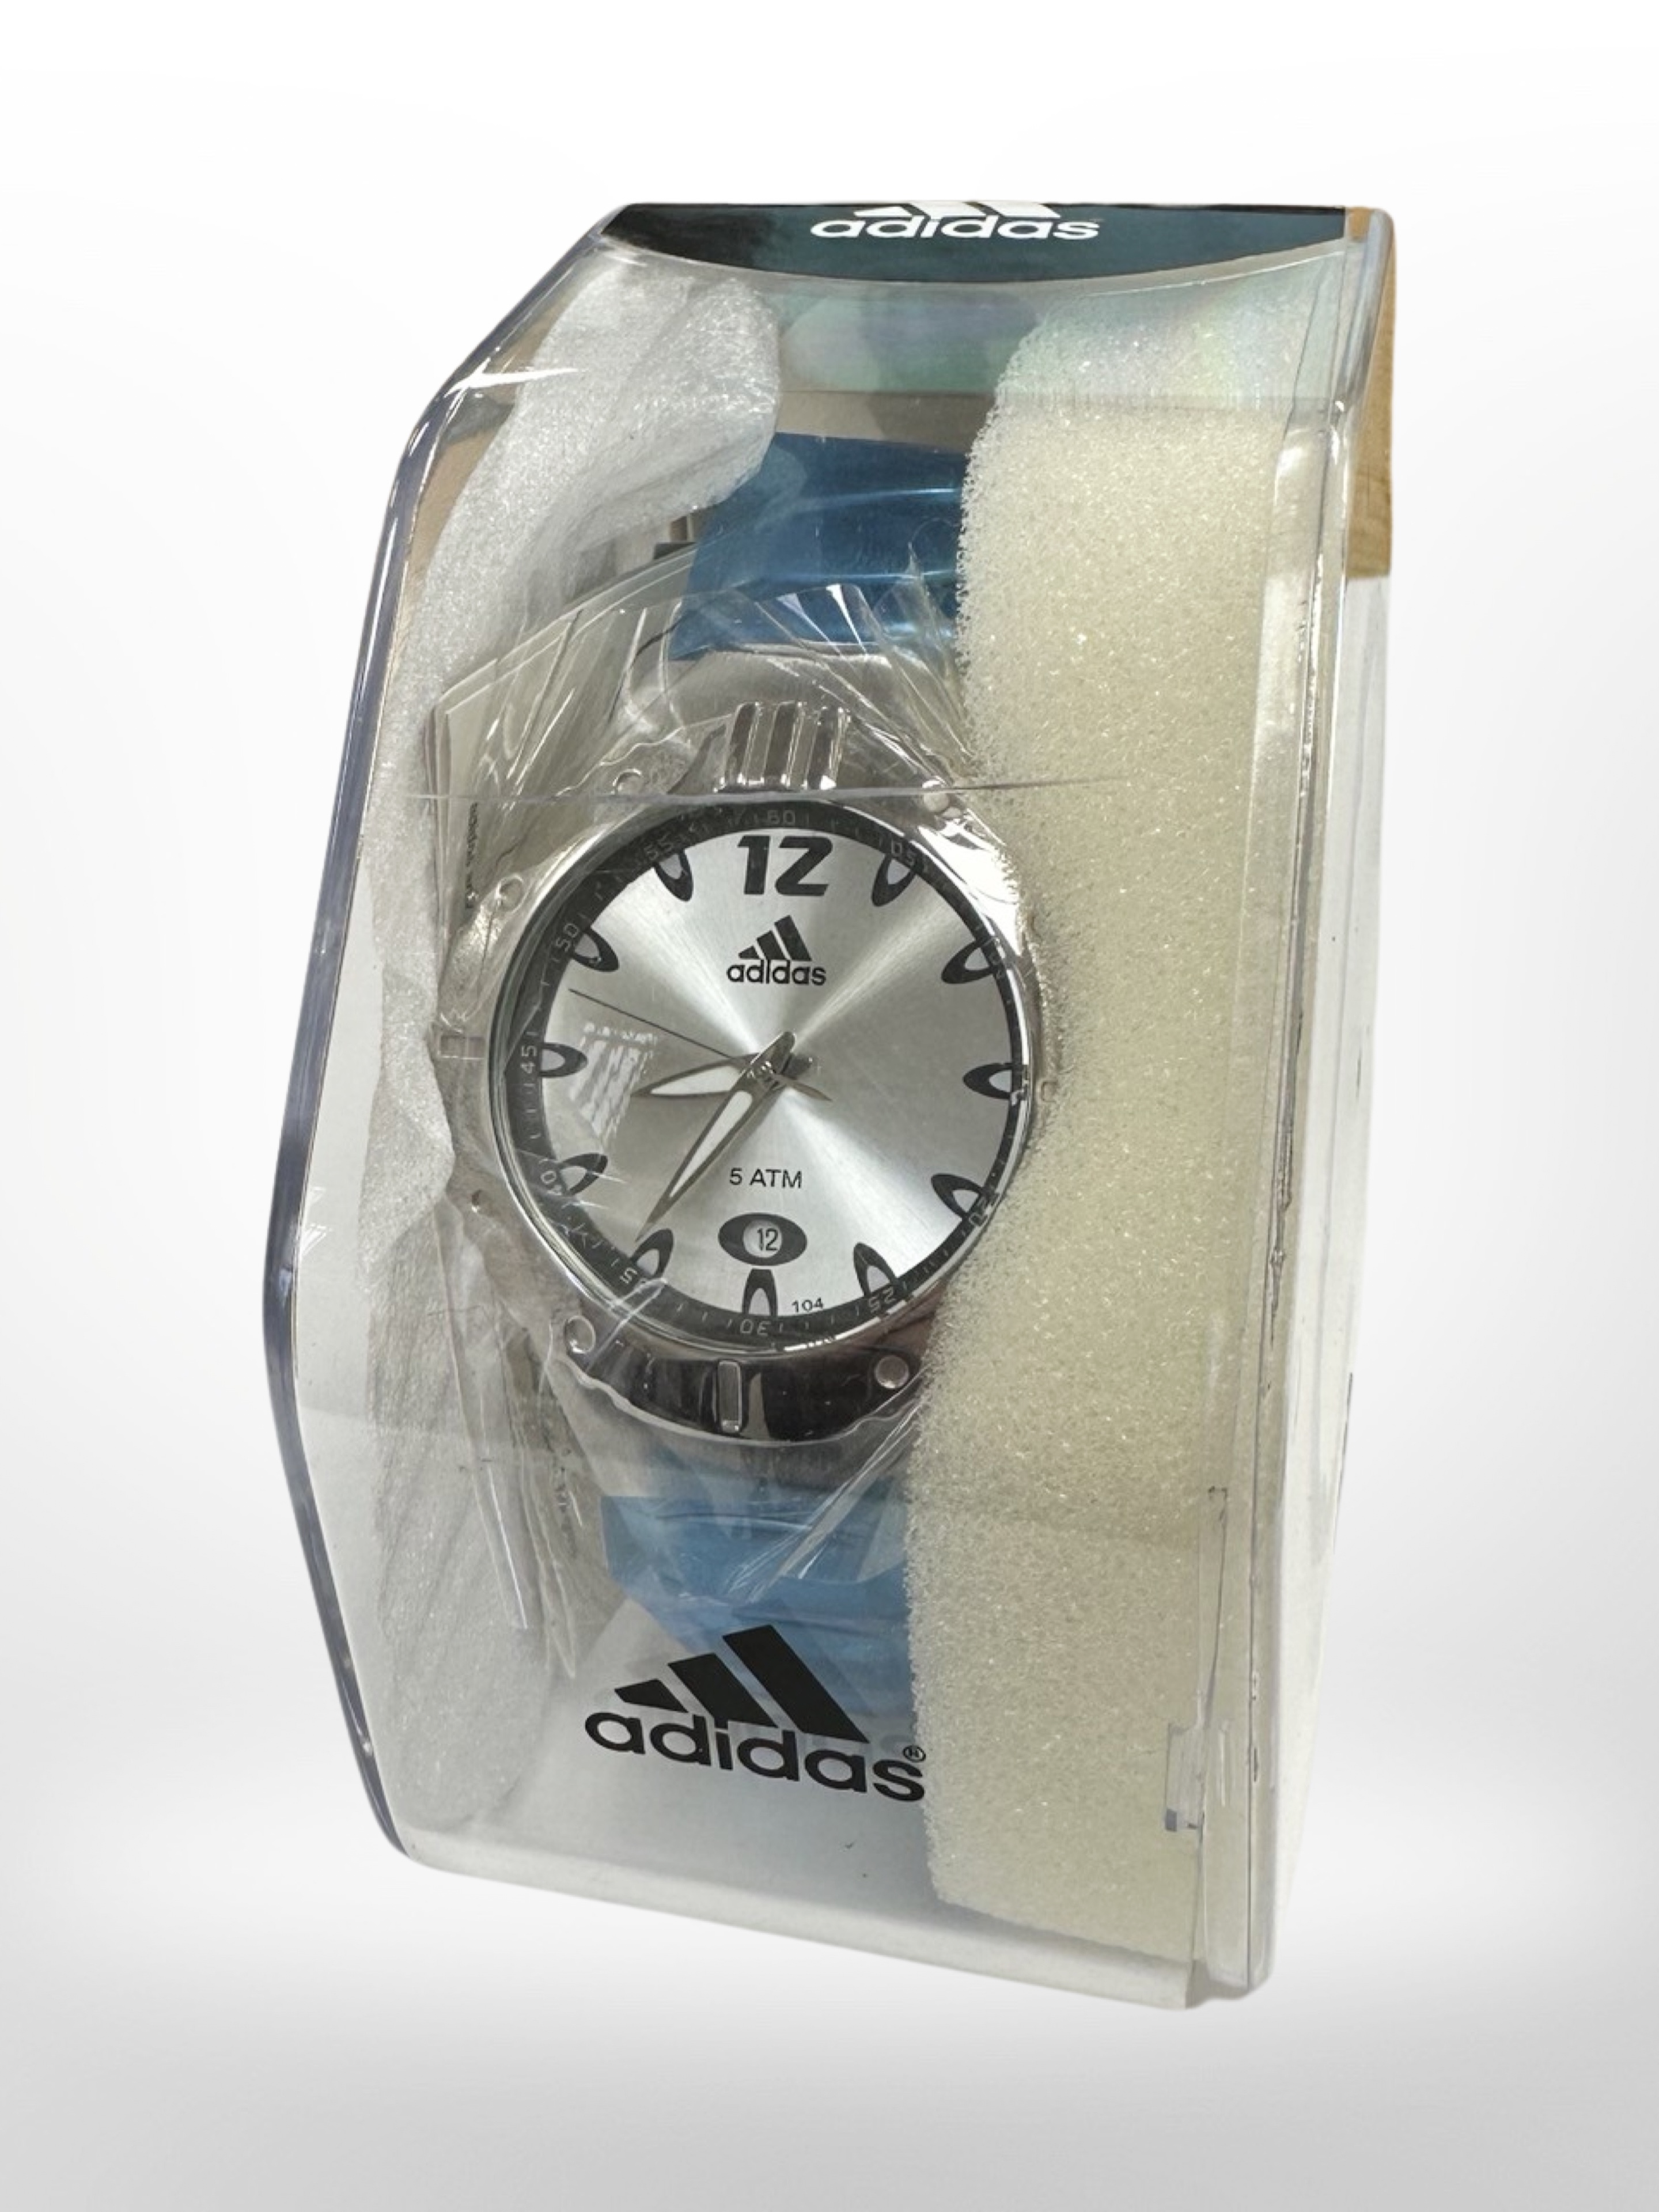 An Adidas sports watch in case